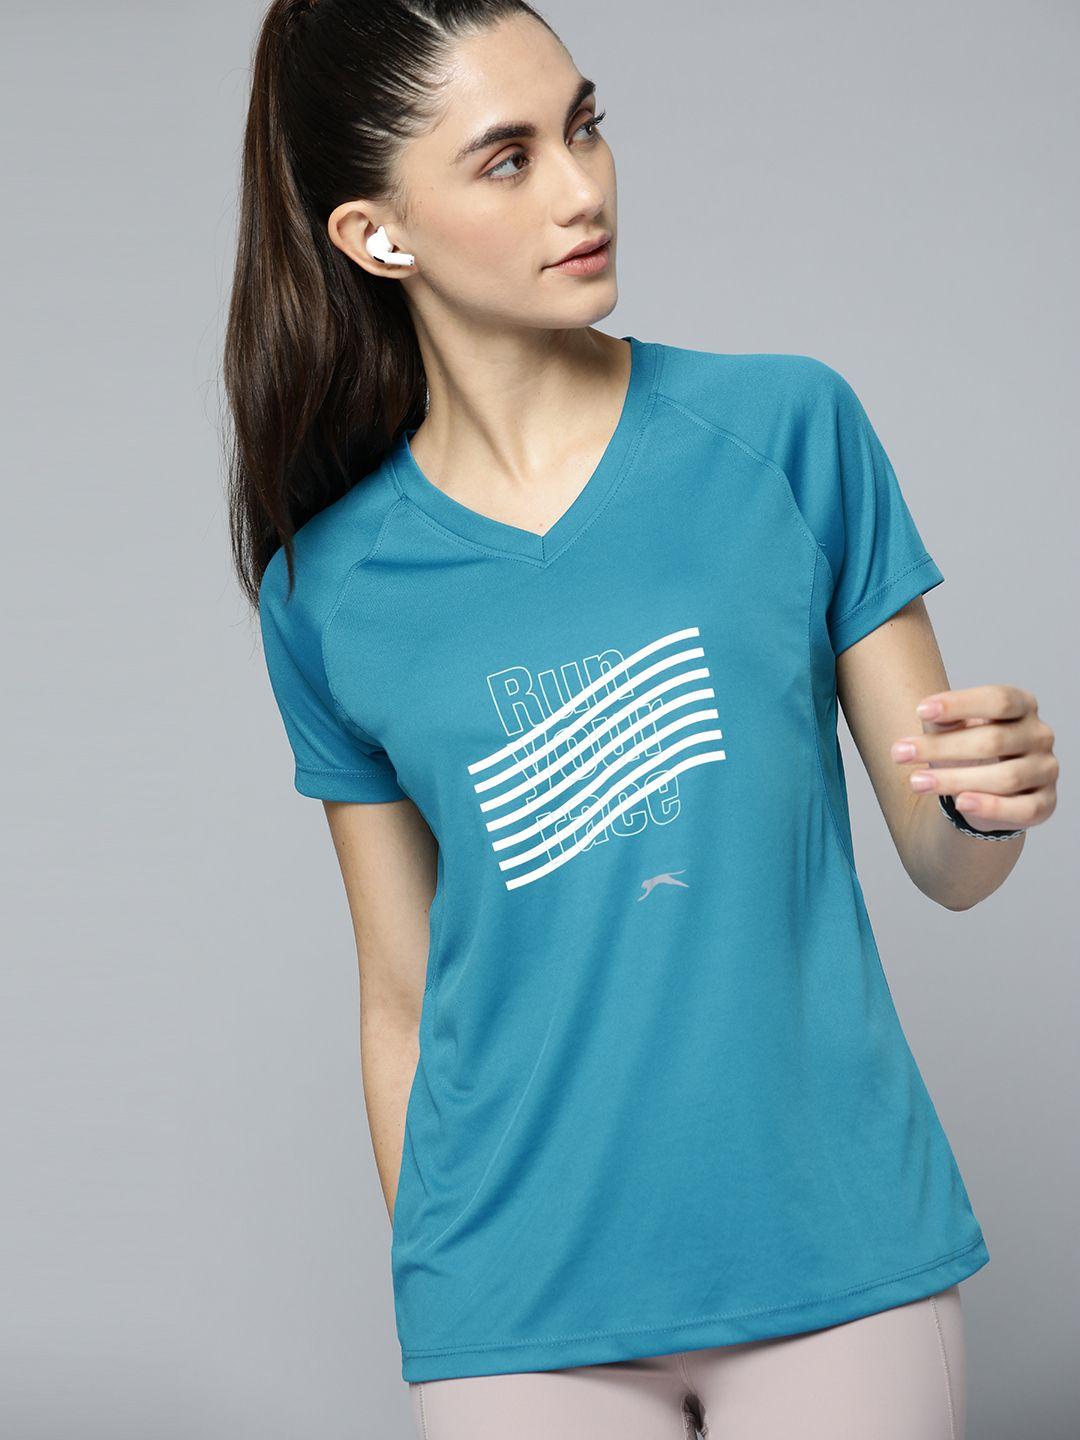 slazenger-women-teal-blue-&-white-striped-running-t-shirt-with-reflective-detail